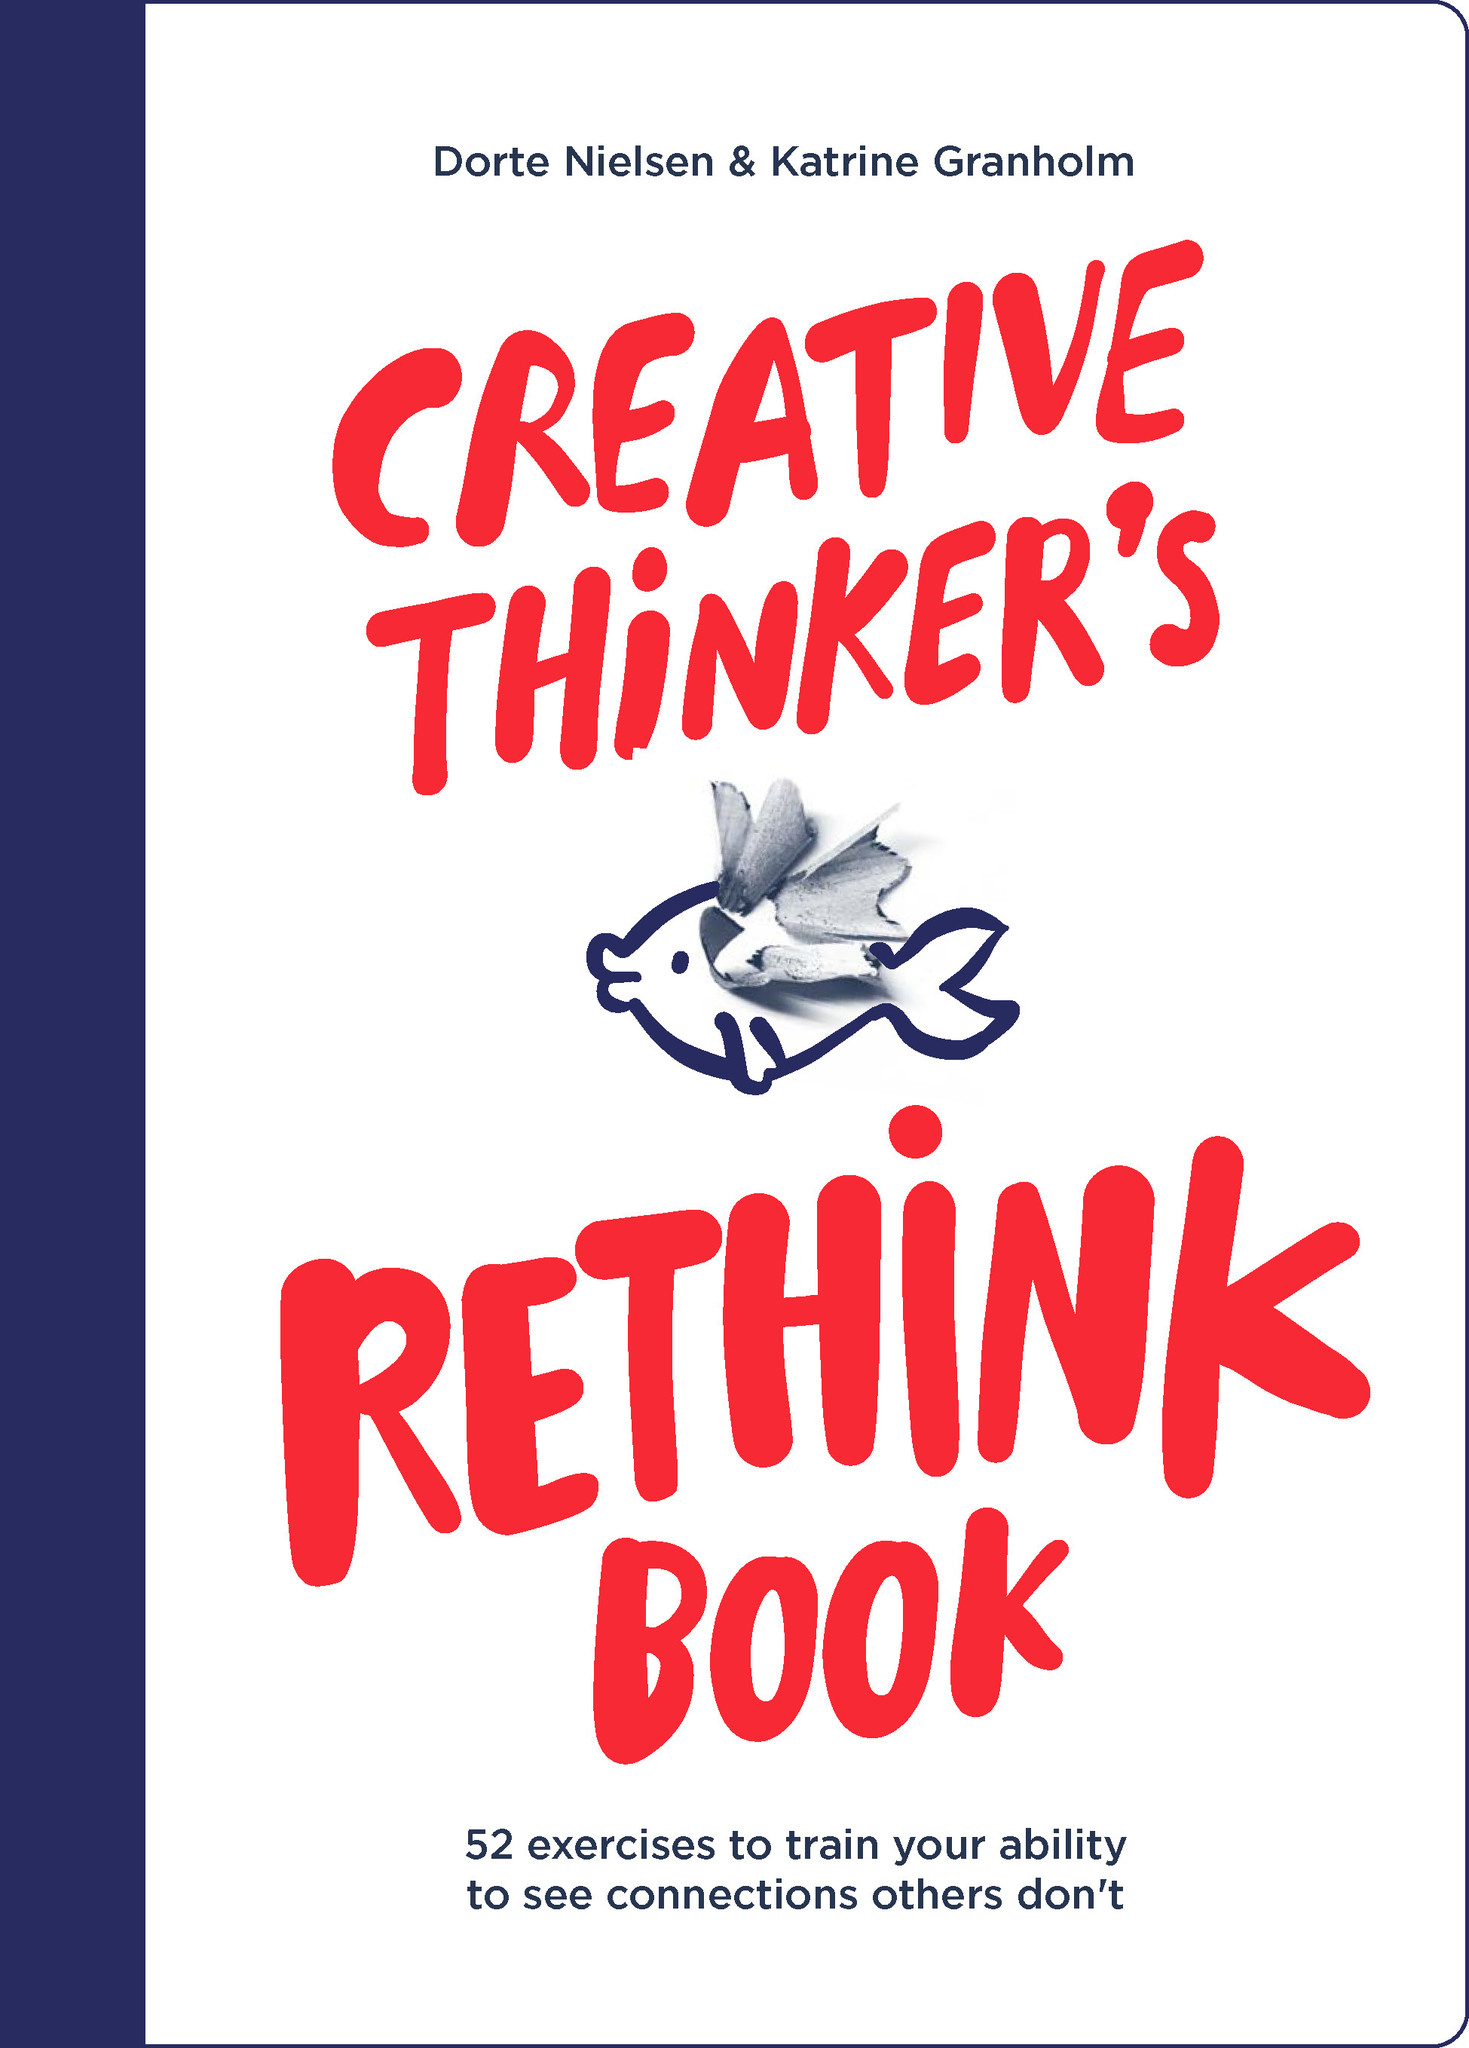 BIS | Creative Thinker's Rethink Book | D. Nielsen & K. Granholm - BIS ...